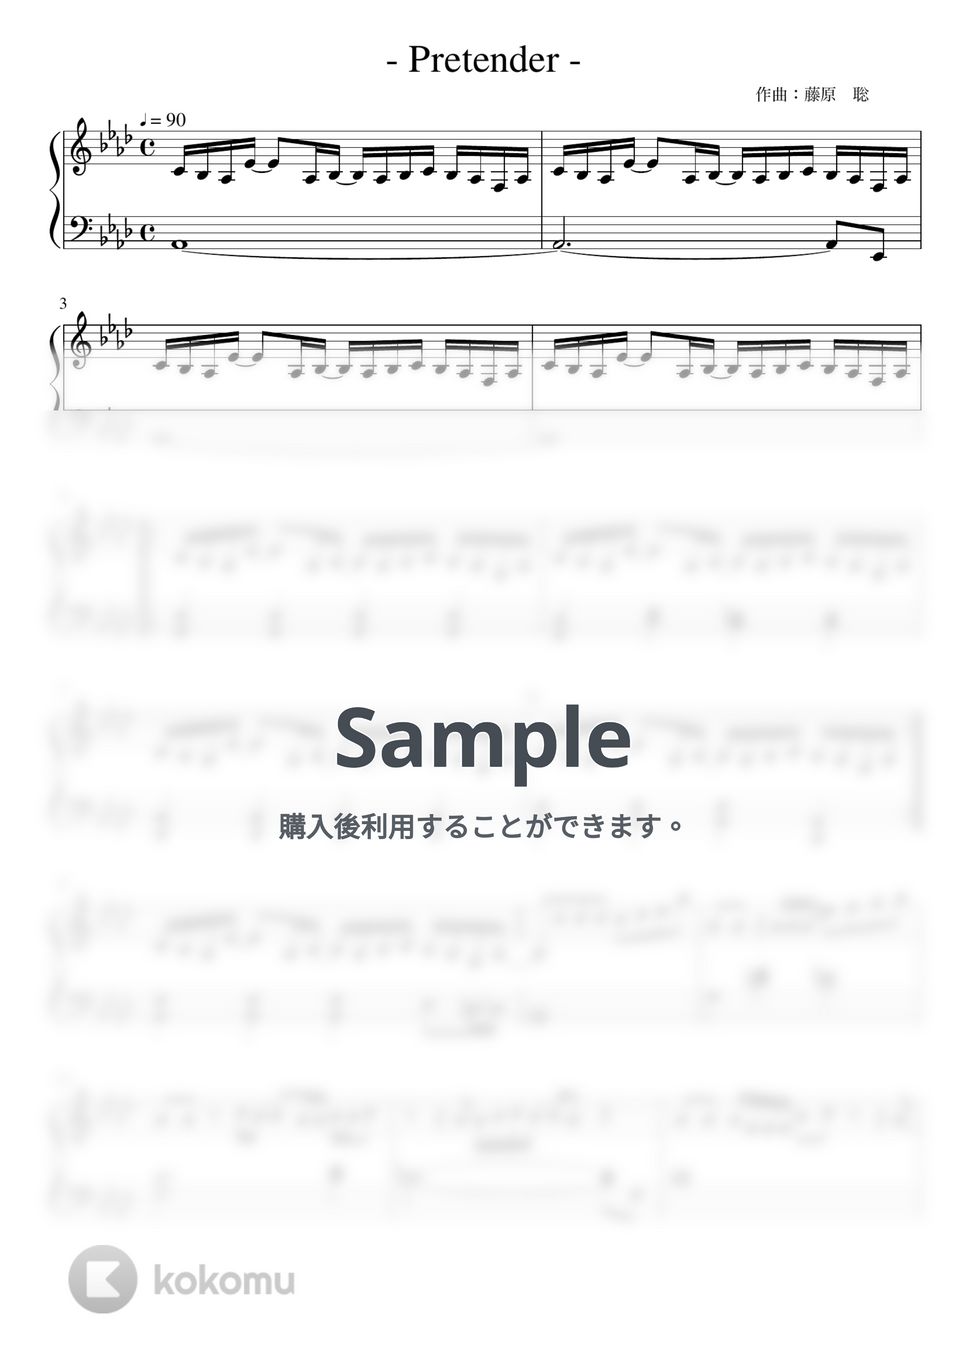 Official髭男dism - Pretender (ピアノ初心者向け / short ver.) by Piano Lovers. jp